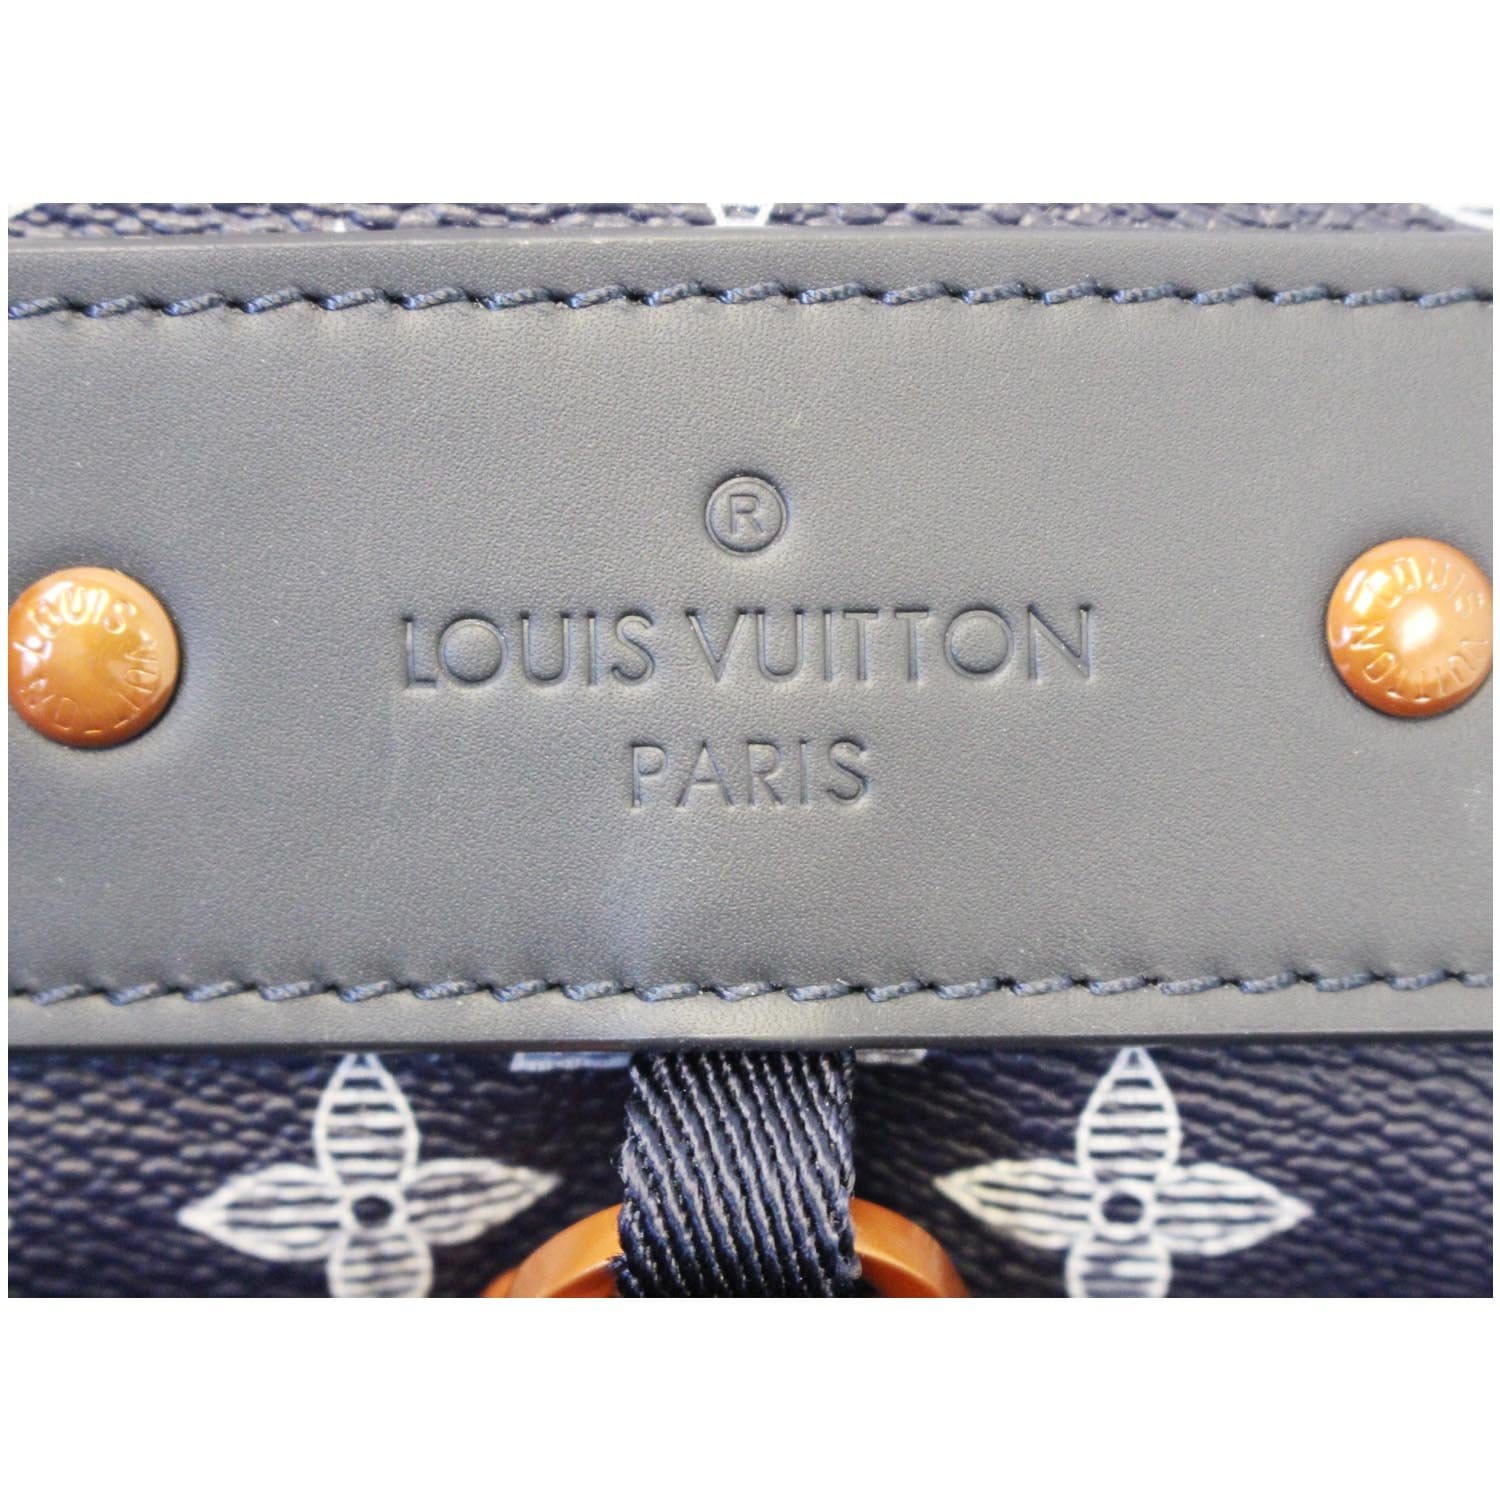 Louis Vuitton Backdrop Print and Ship (Копировать)